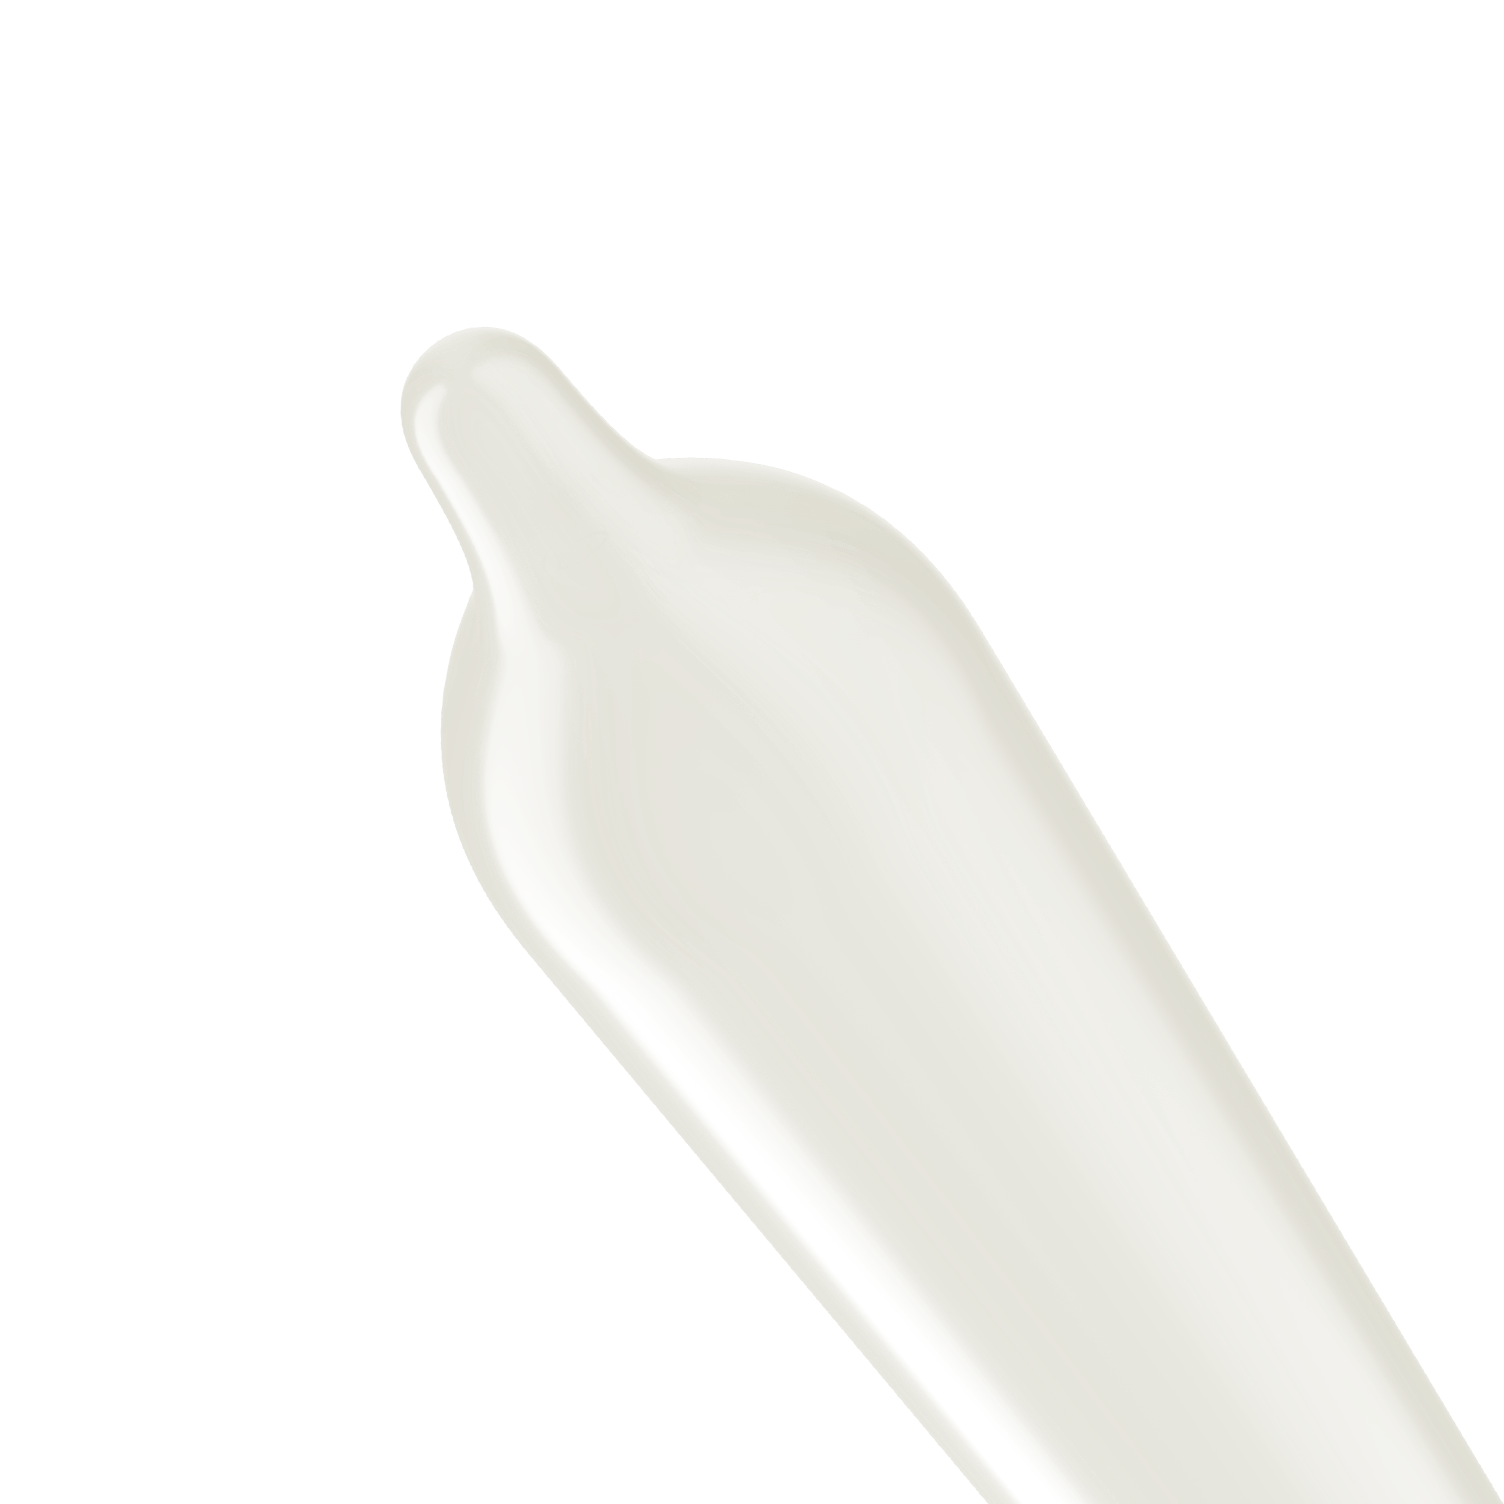 Trojan Supra Bareskin thin straight shaped condom with reservoir tip.